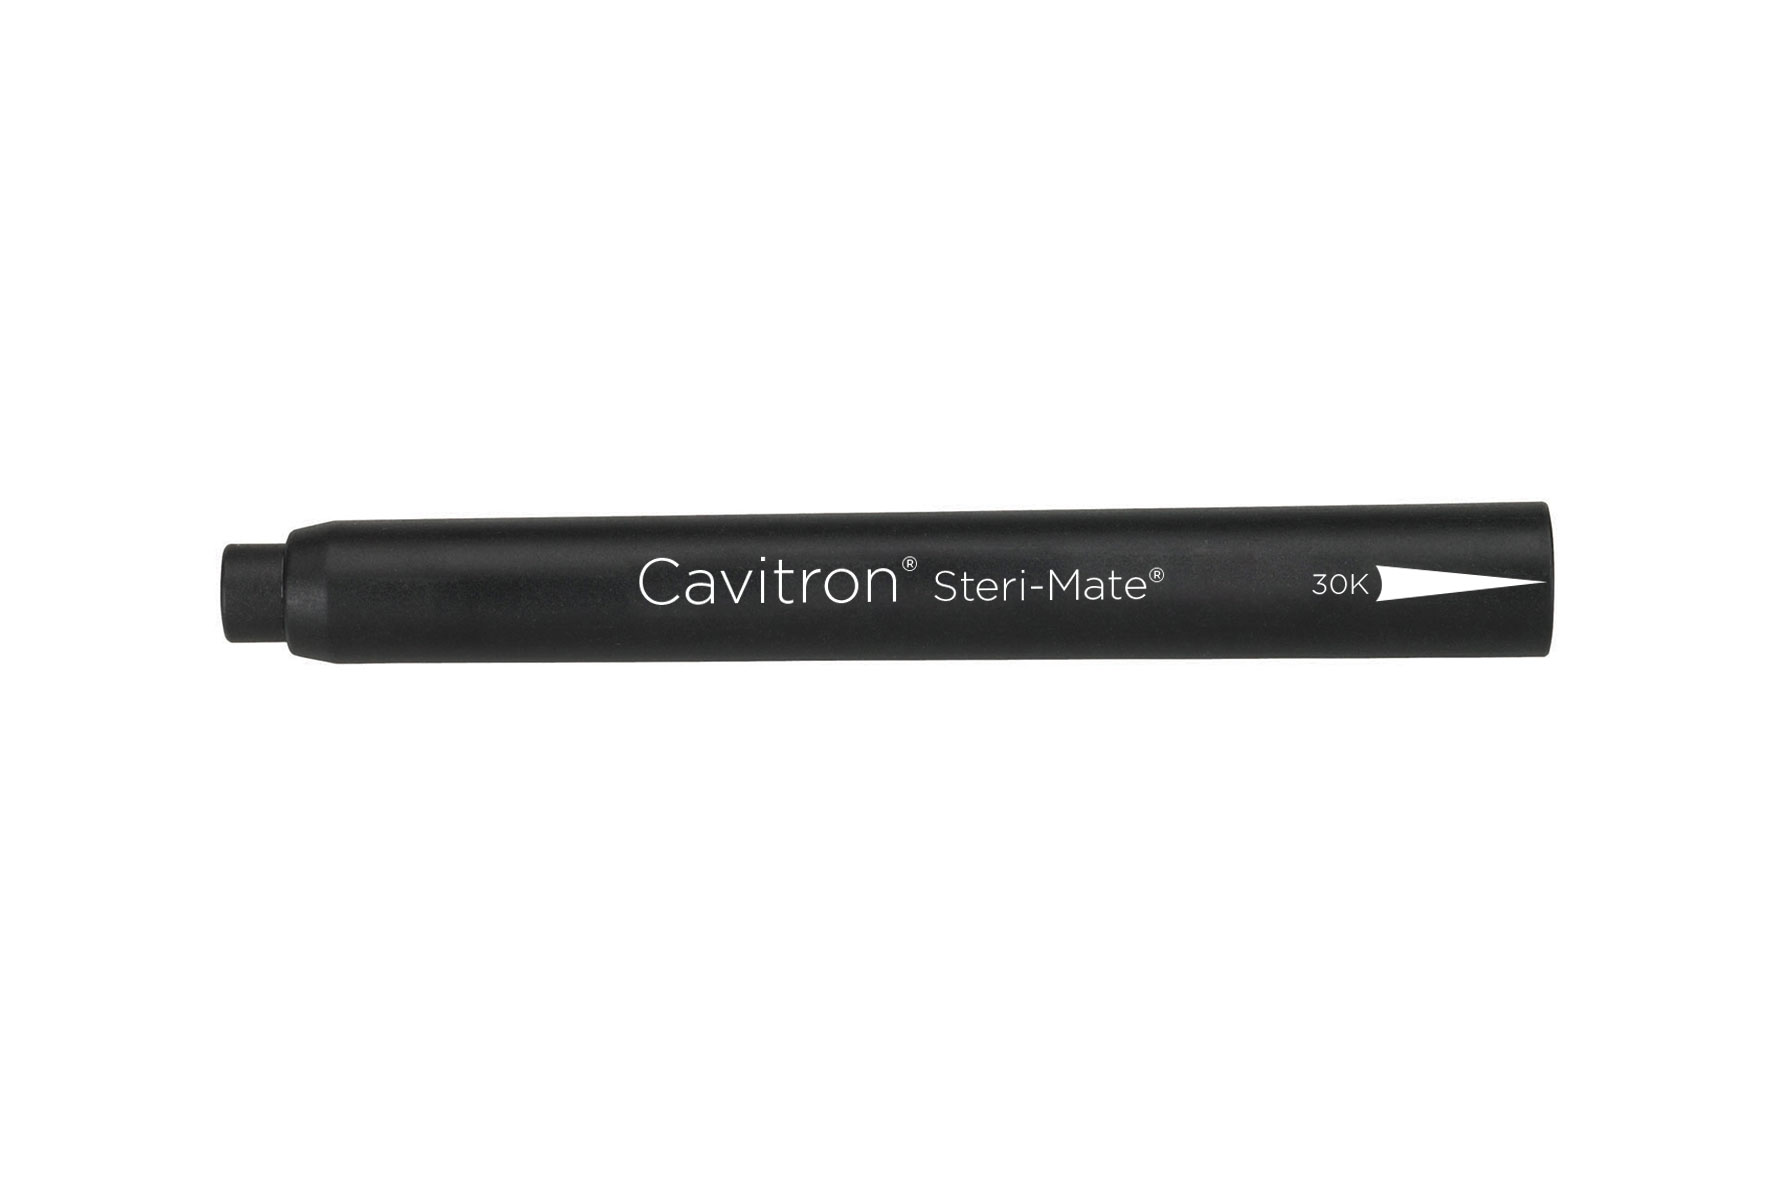 Cavitron Steri-Mate Detachable Sterilizable Handpiece